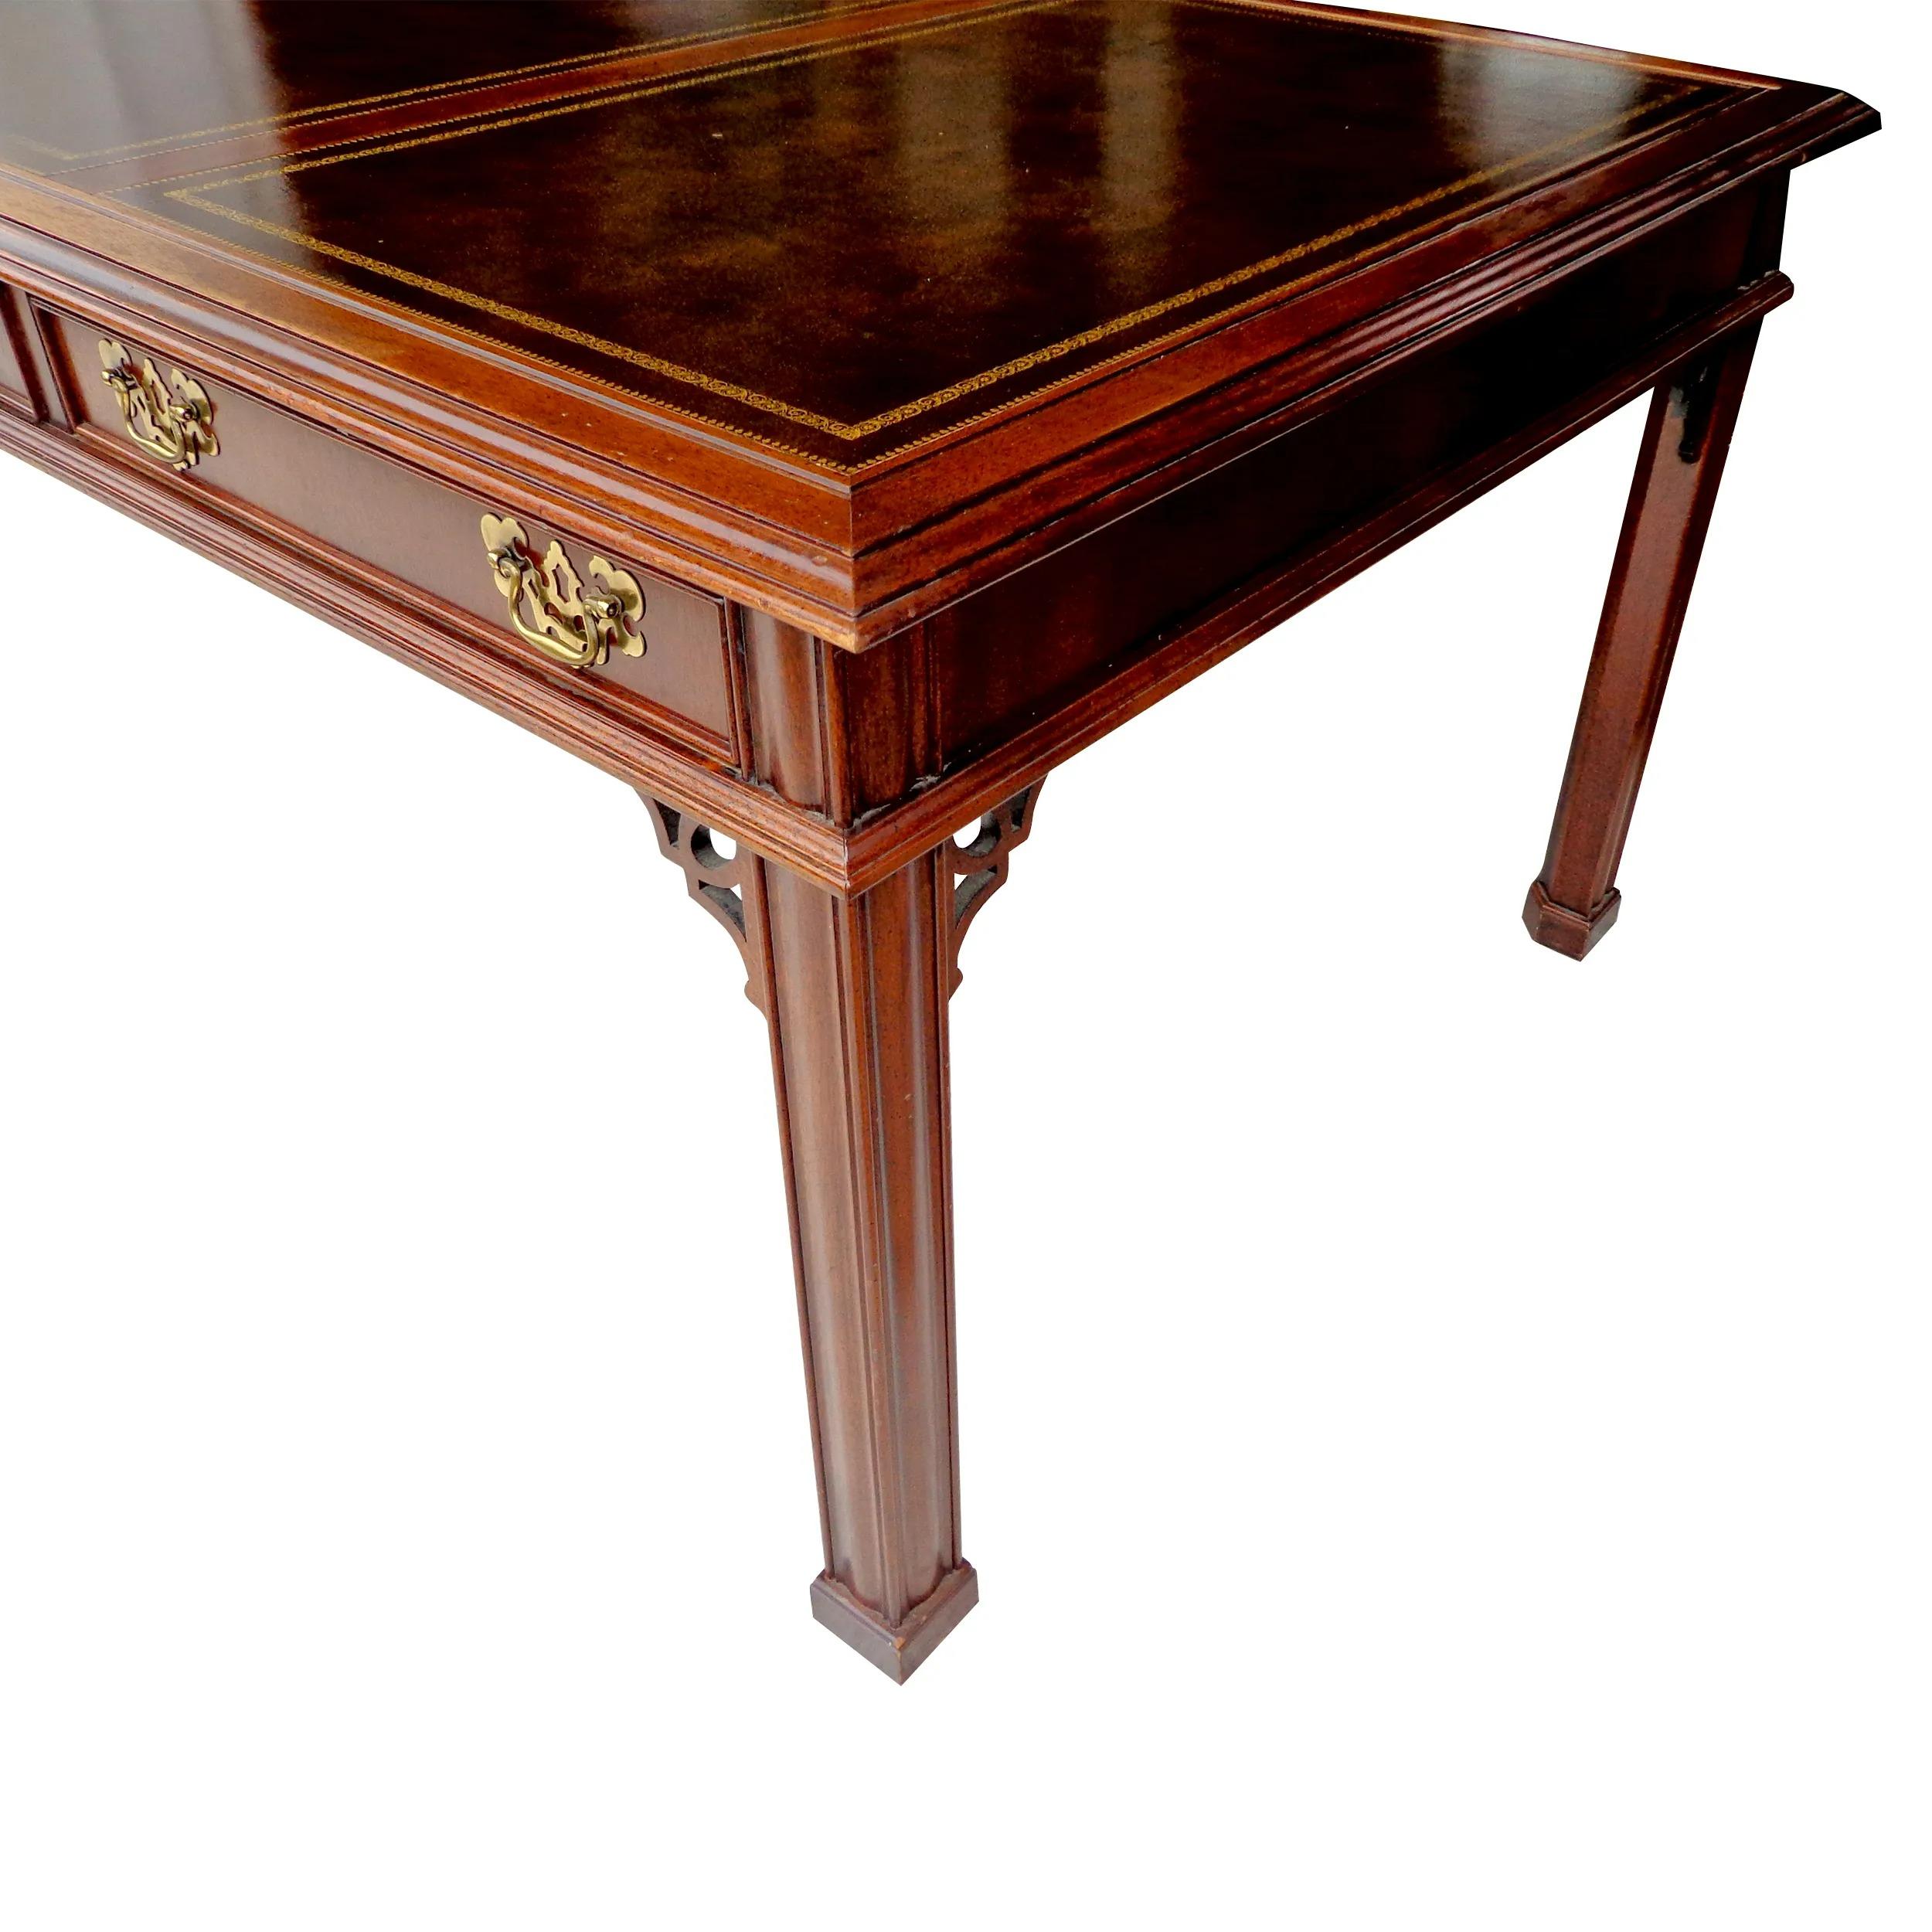 20th Century 7' Banded Chippendale Regency Sligh Furniture Writing Desk